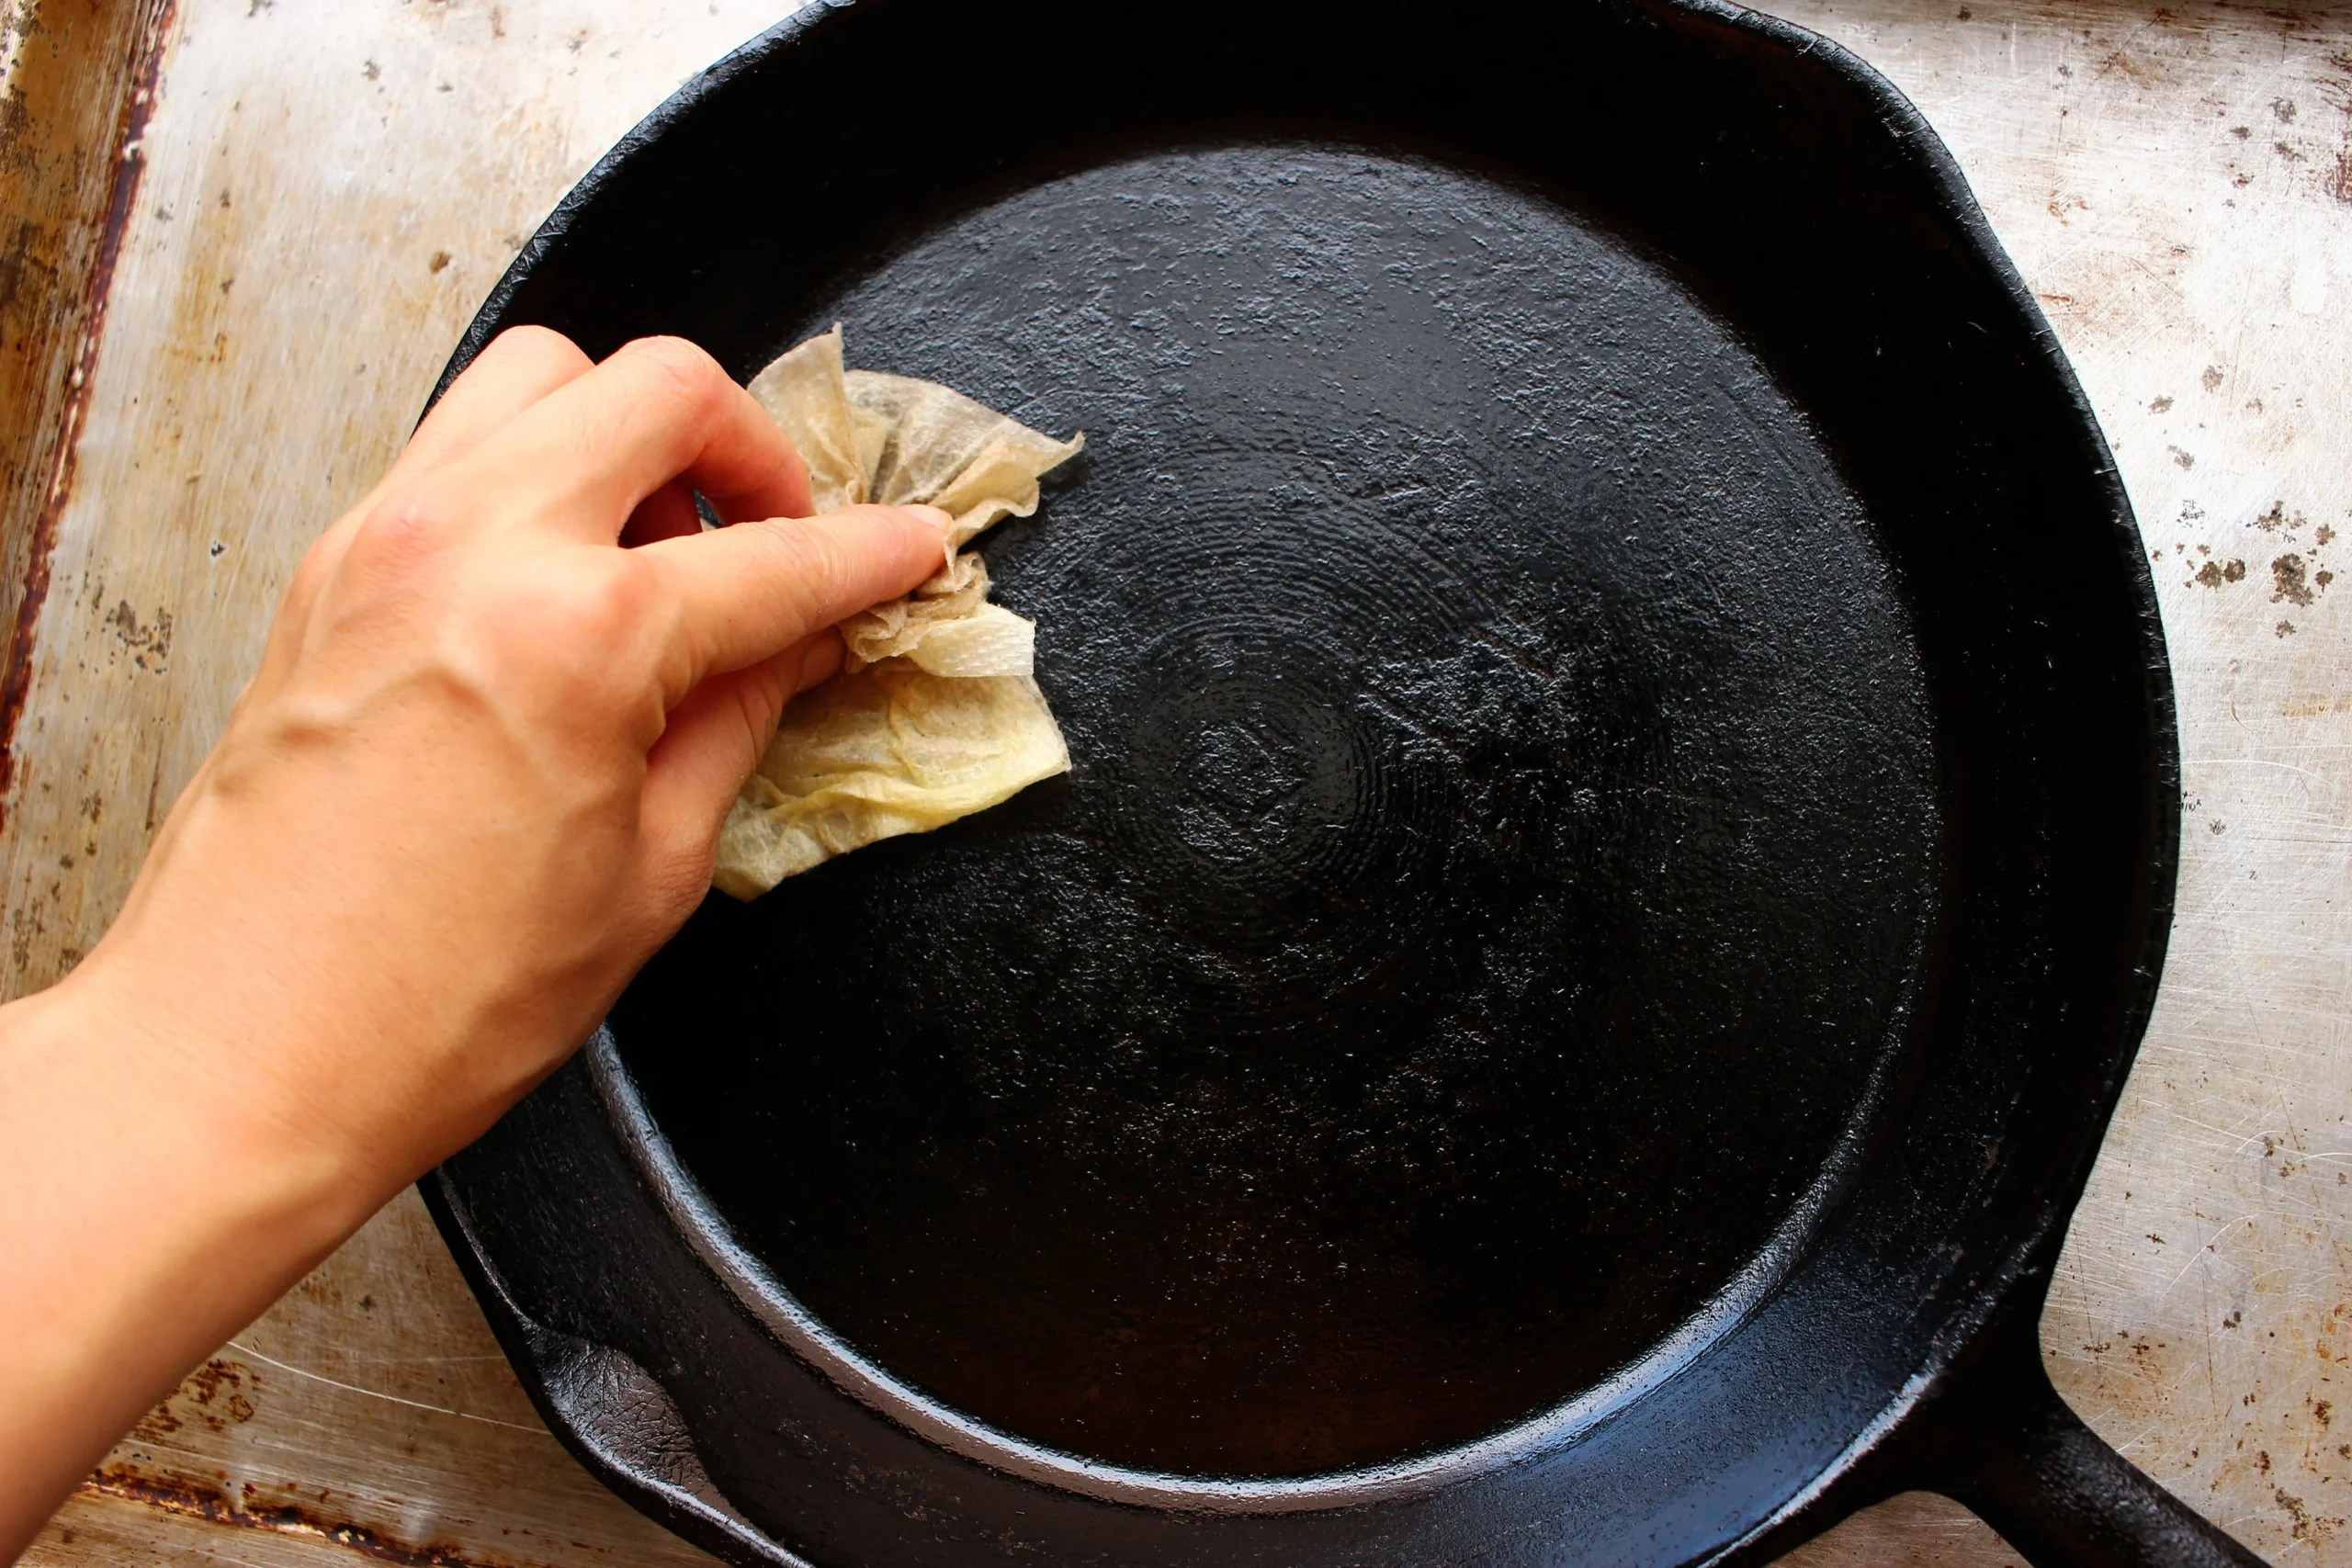 how to season a cast iron pan